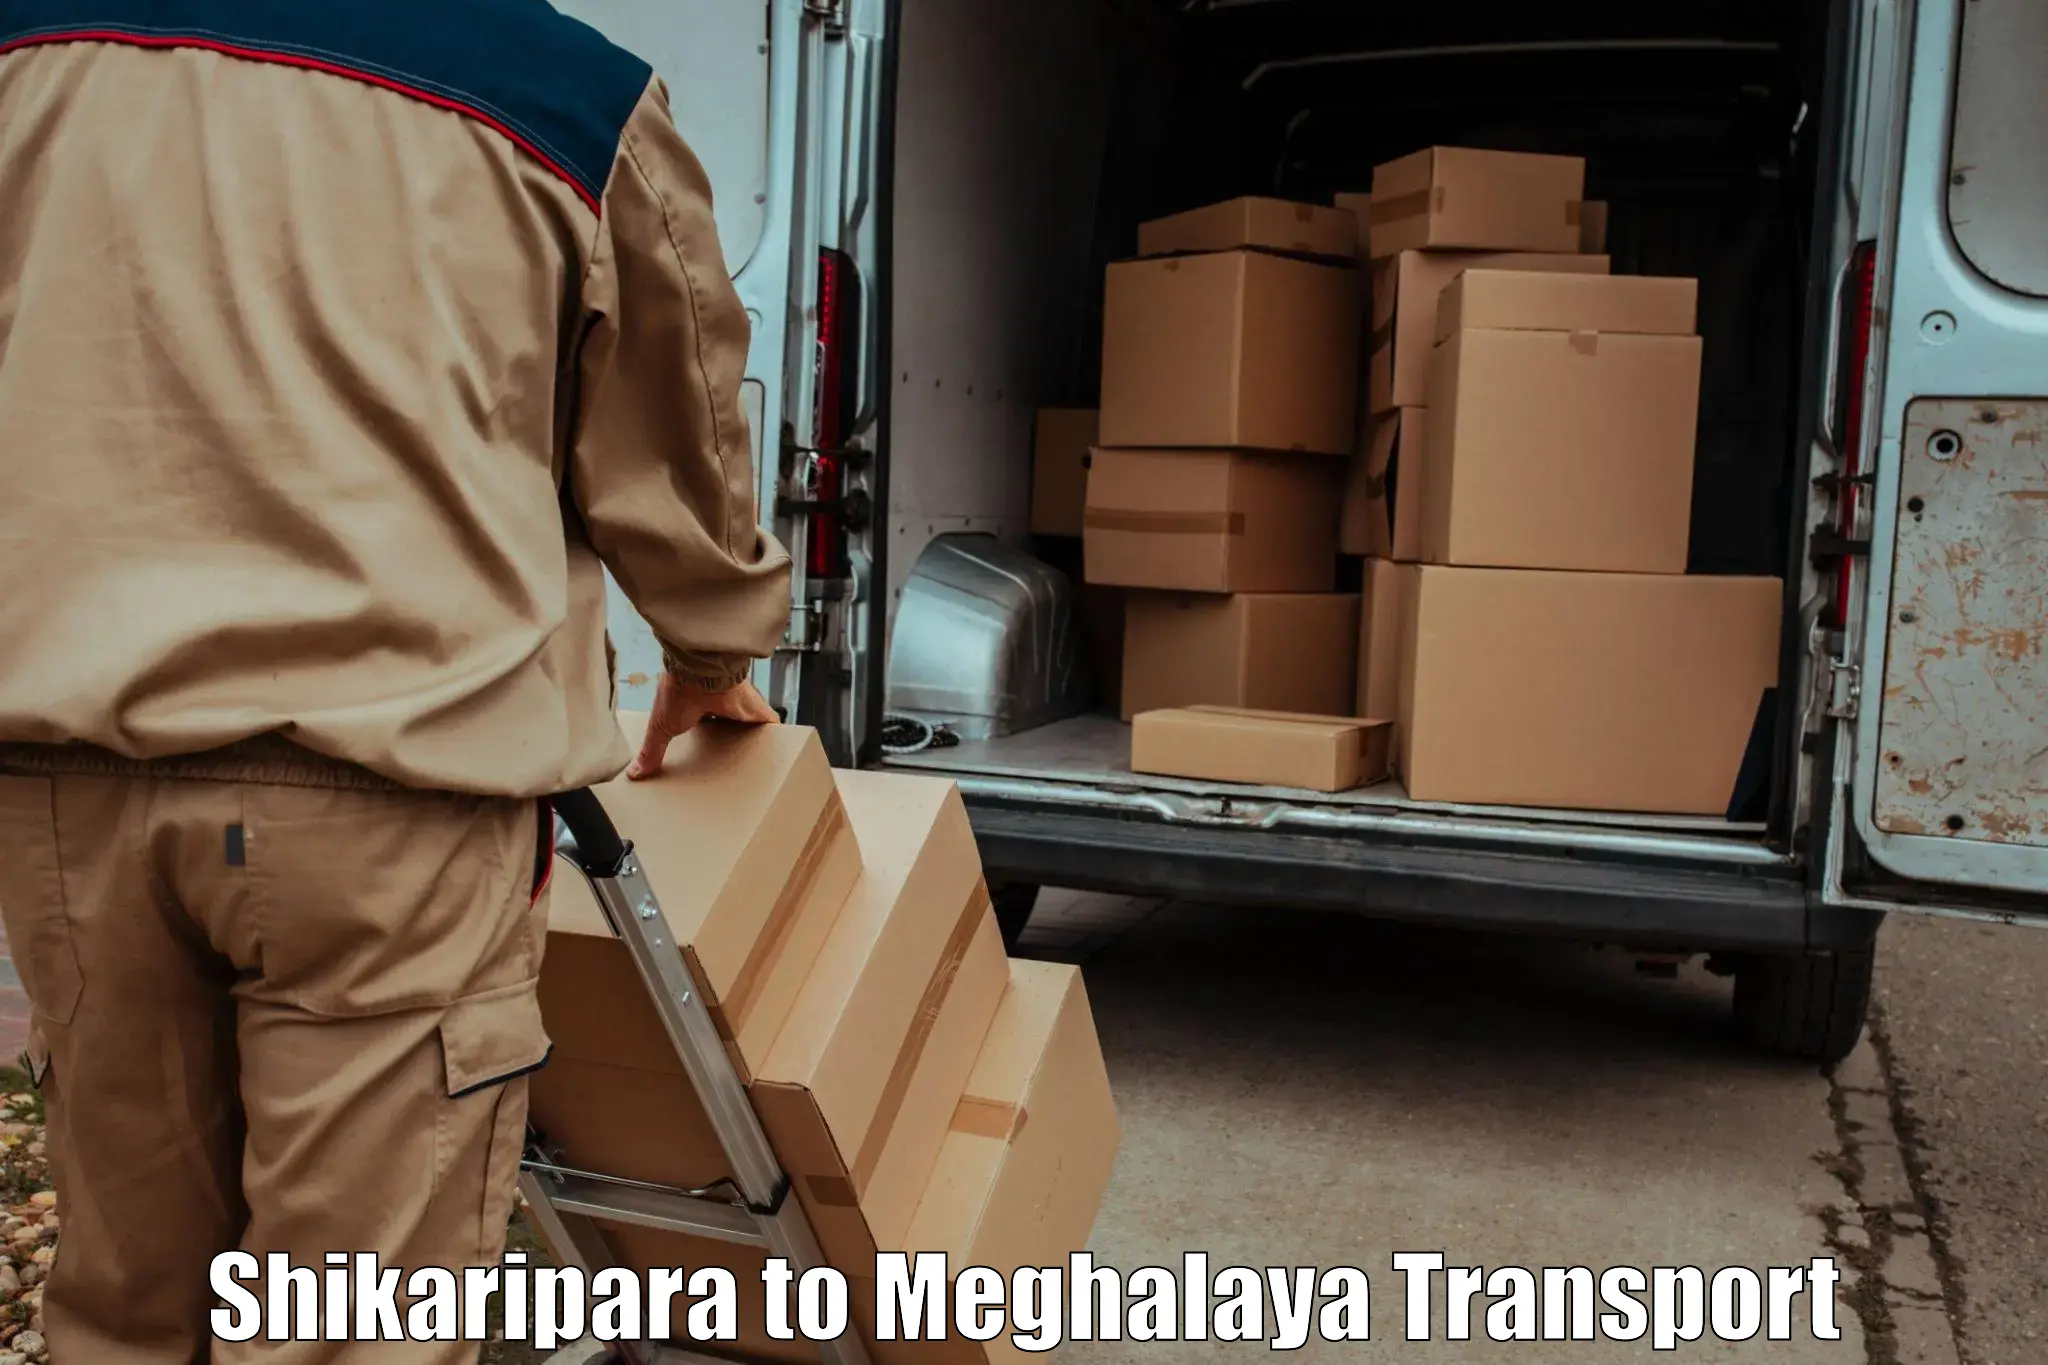 Container transport service Shikaripara to Meghalaya